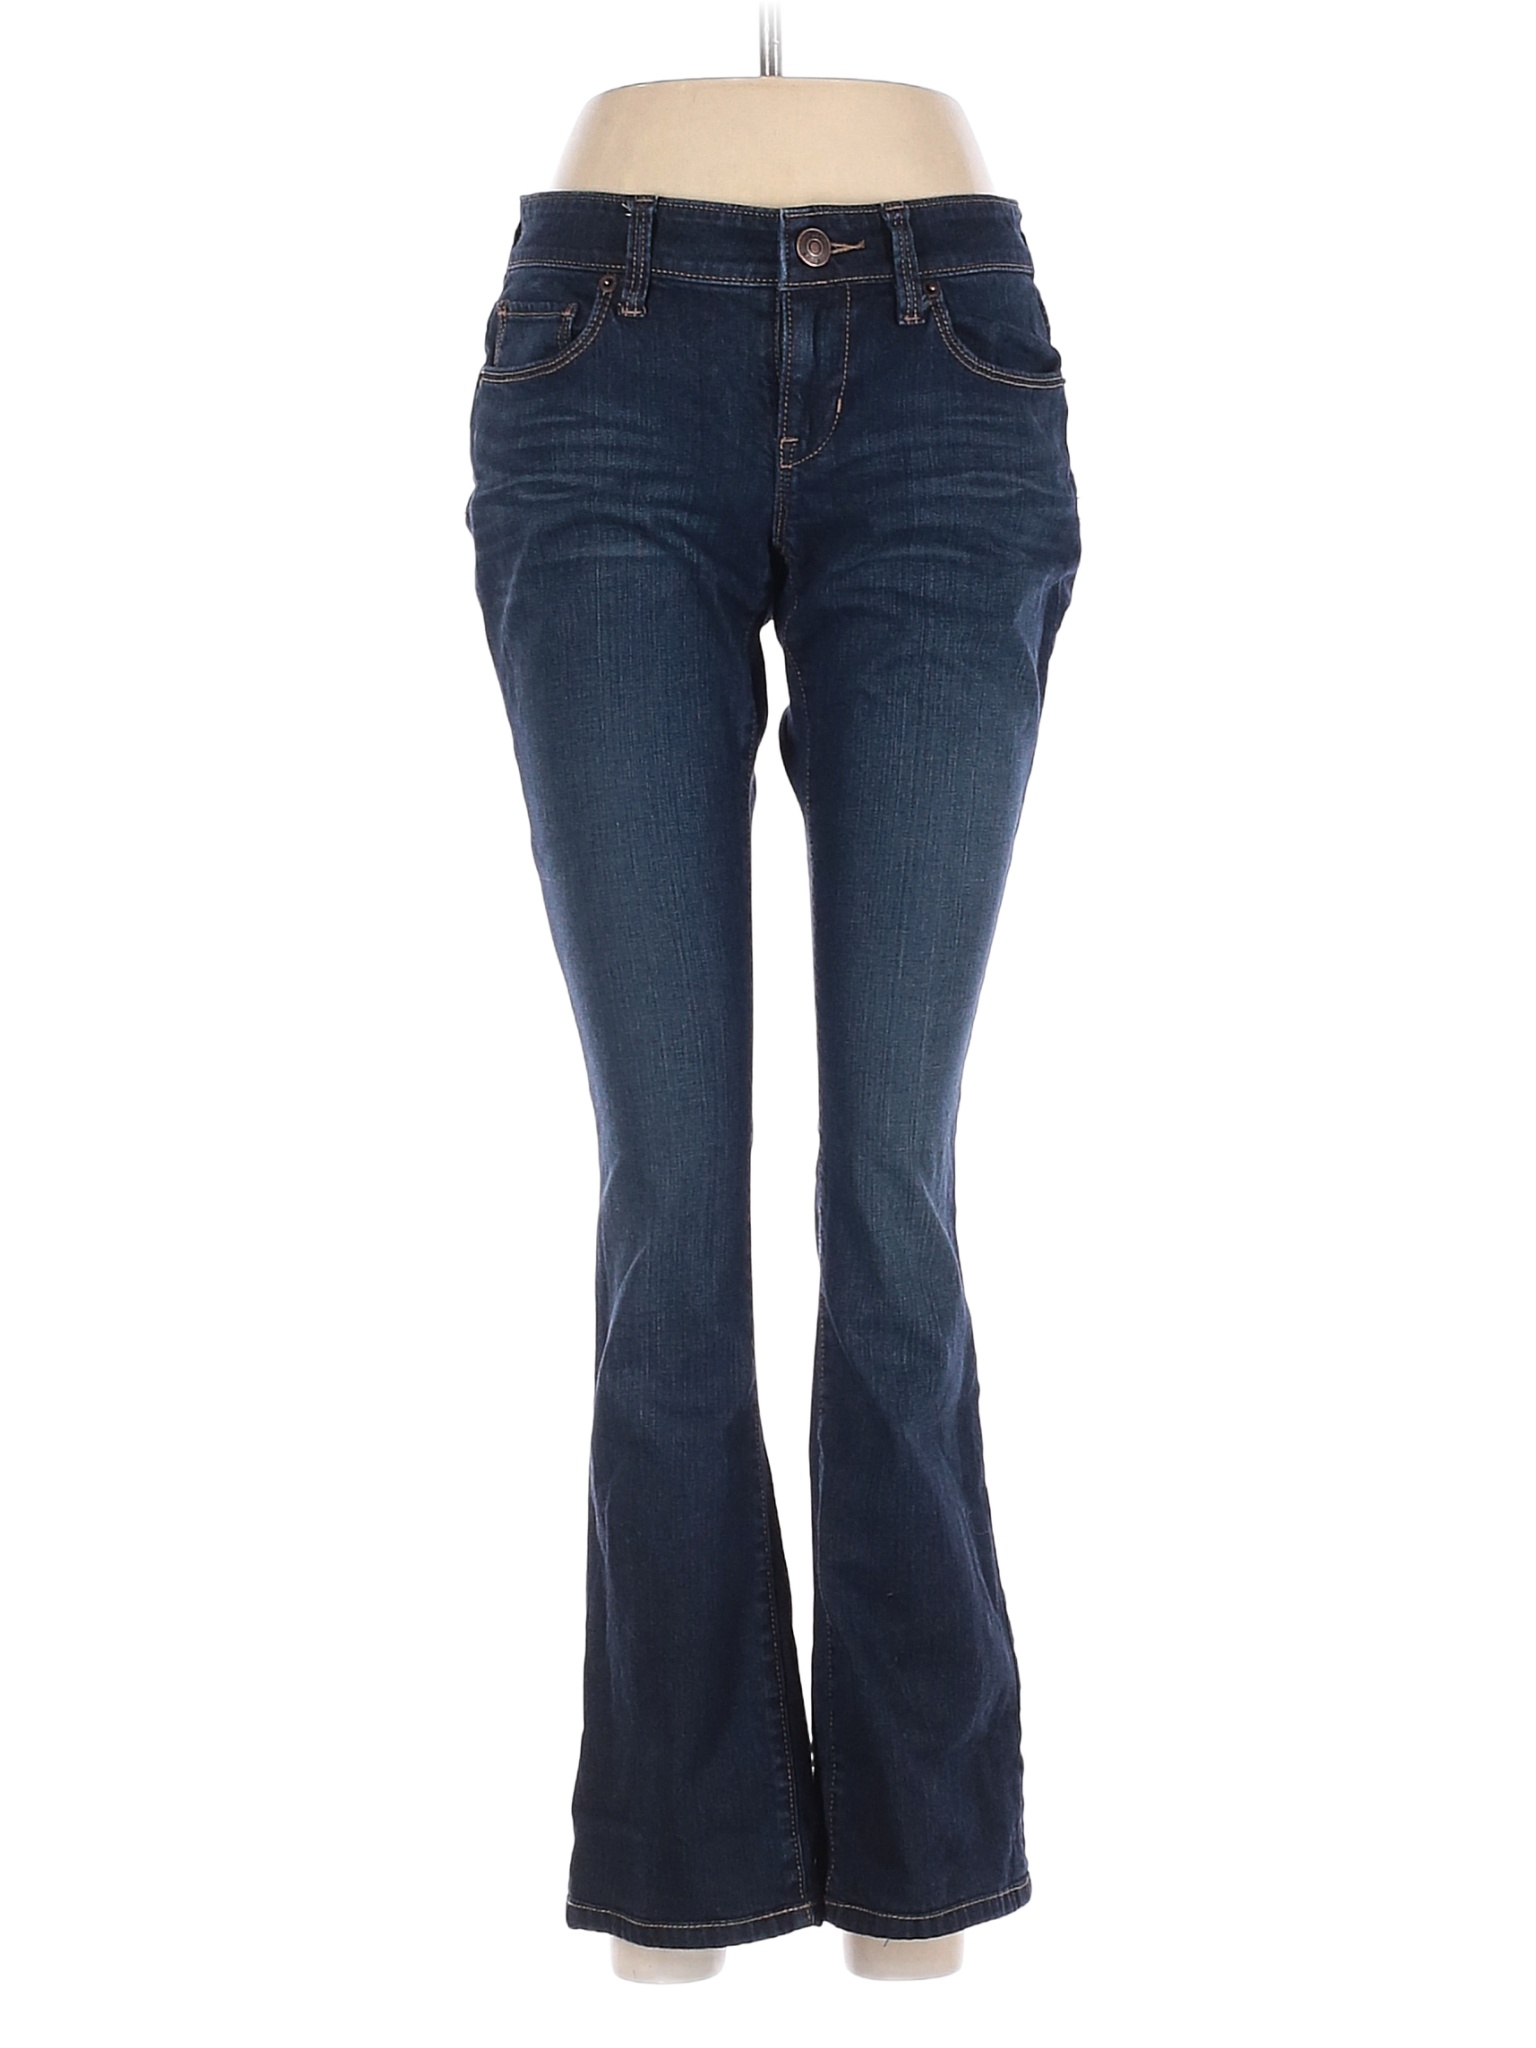 Ann Taylor LOFT Solid Blue Jeans 25 Waist - 85% off | thredUP